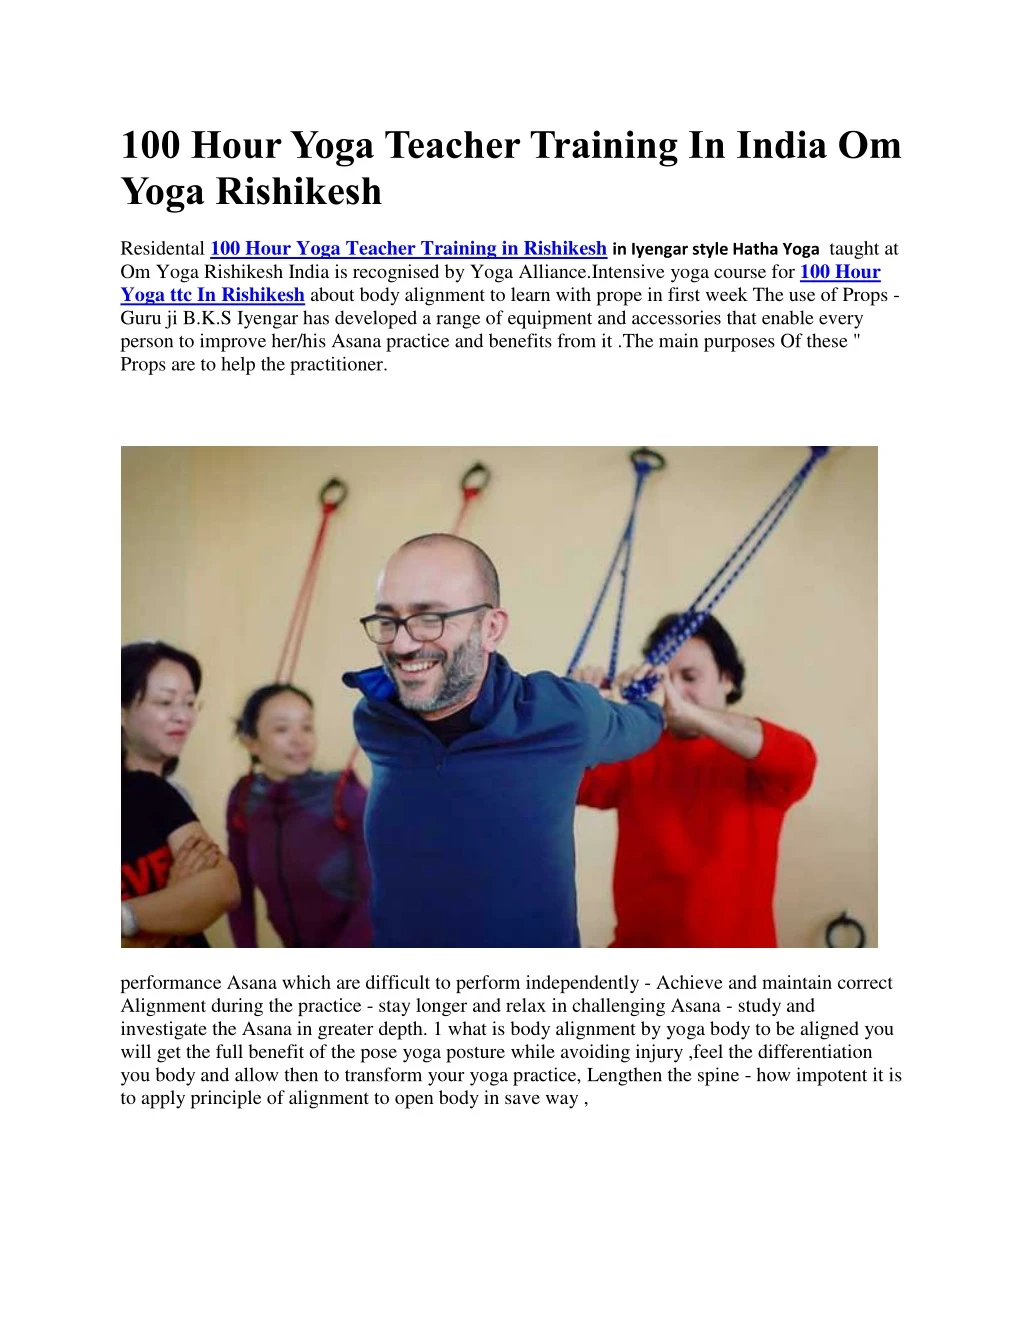 100 hour yoga teacher training in india om yoga